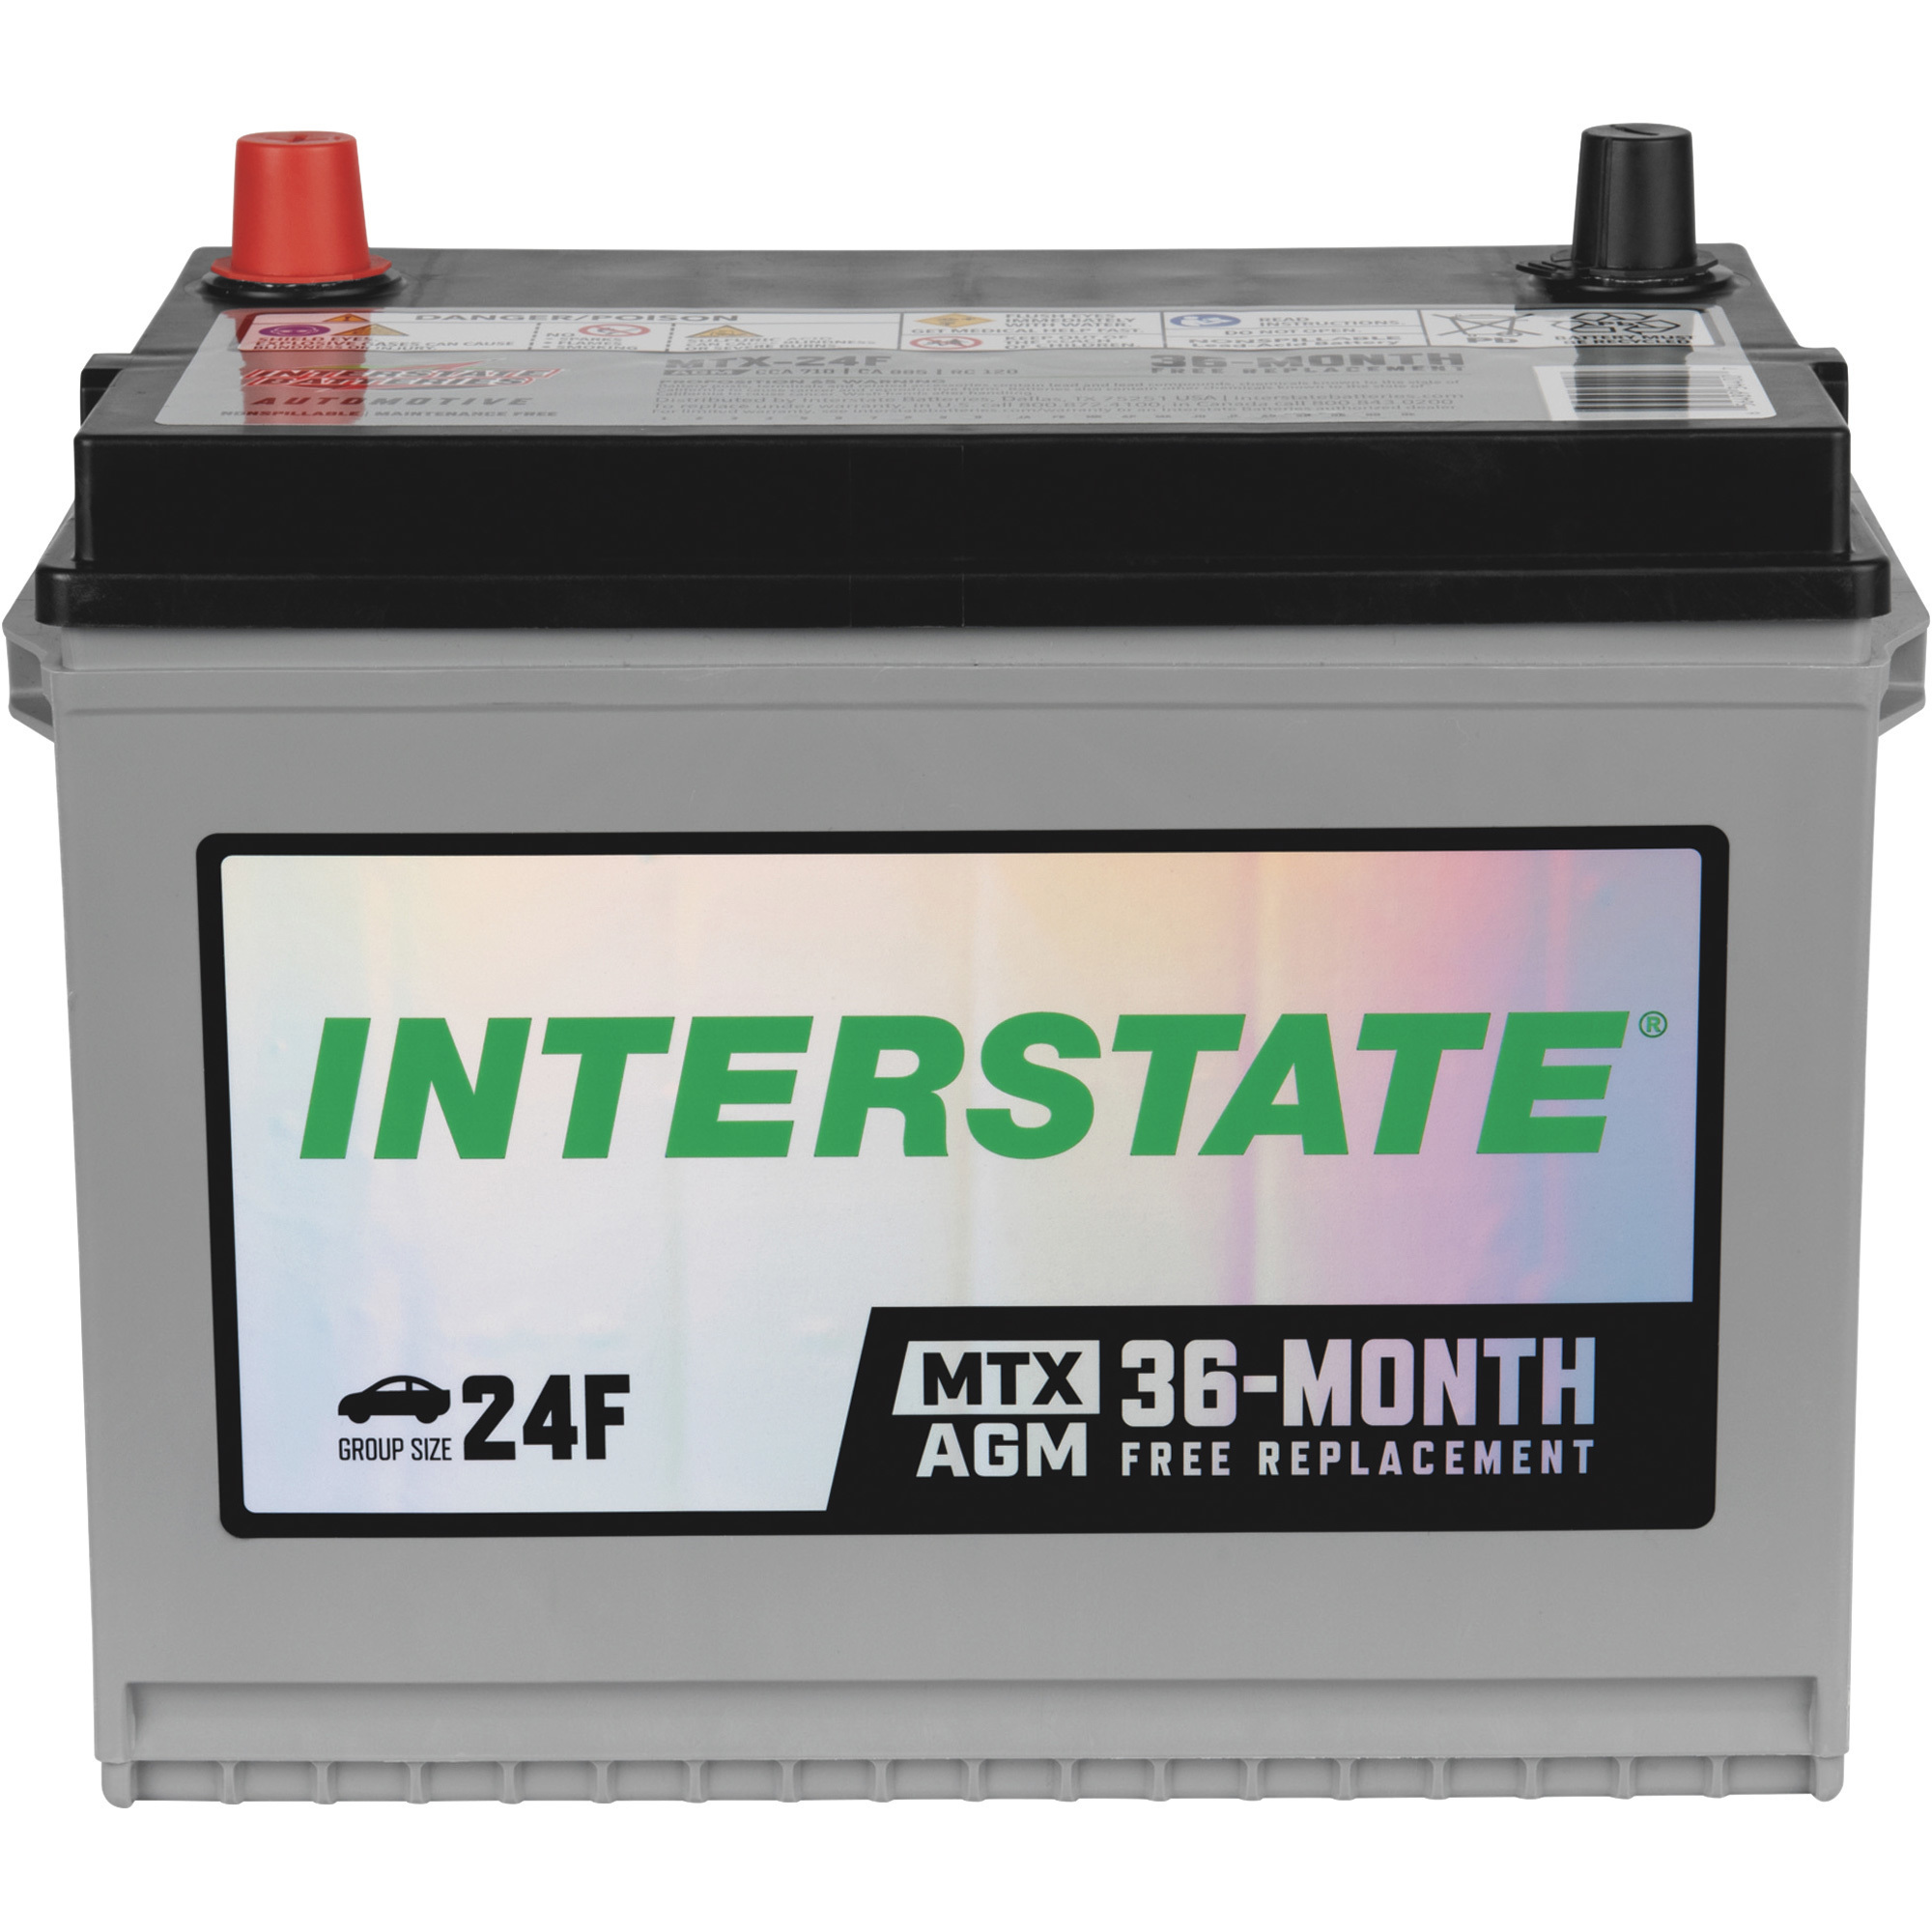 Interstate MTX Series Automotive Battery â Group Size 24F, 12 Volt, 710 CCA, Absorbed Glass Mat, Model MTX-24F